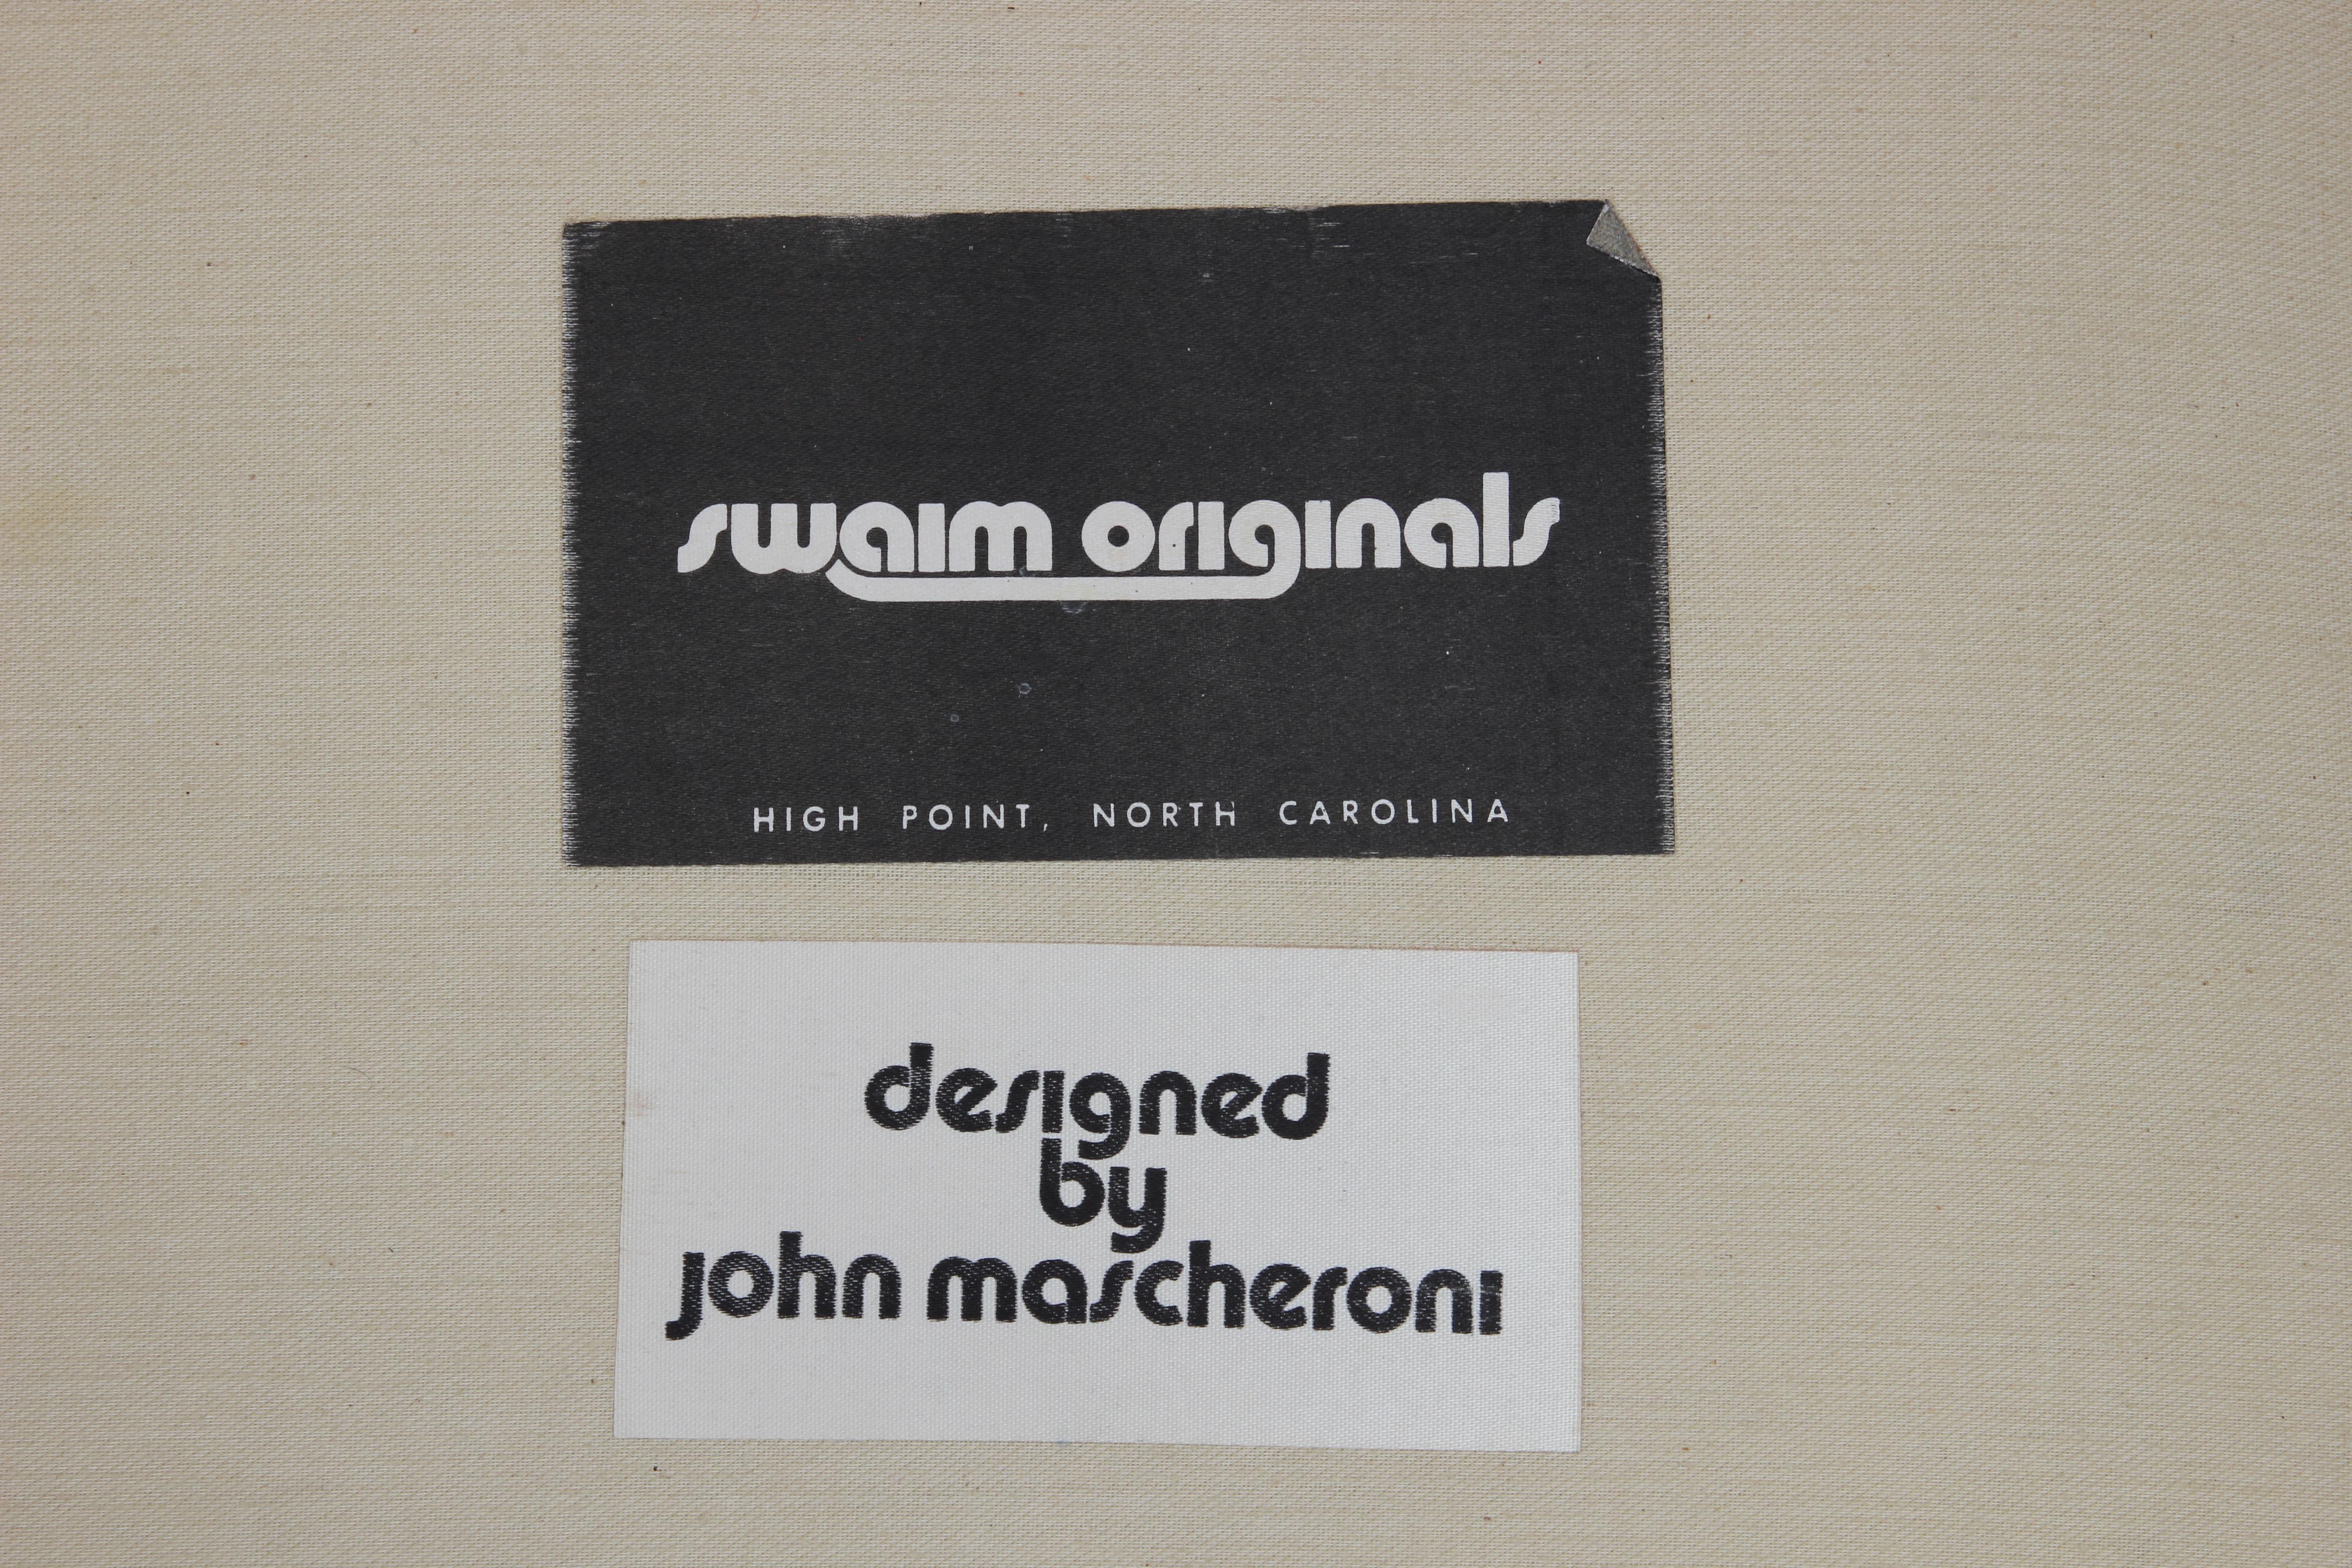 Pair of Pink Chanel Back Postmodern Chairs by John Masheroni Swaim Originals 1